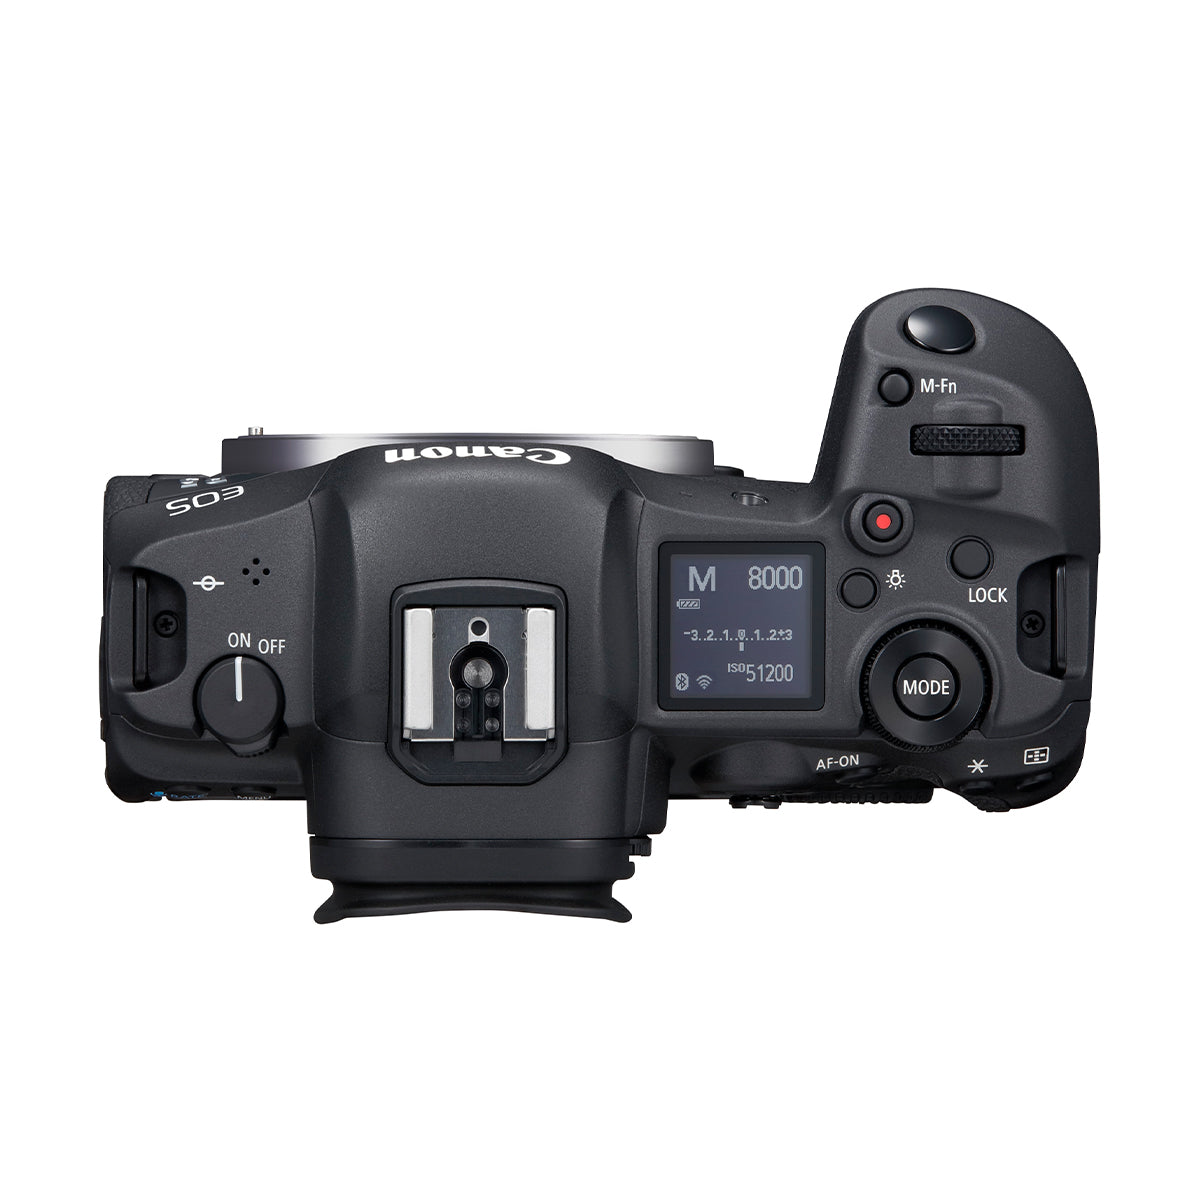 Canon EOS R5 Mirrorless Camera Body